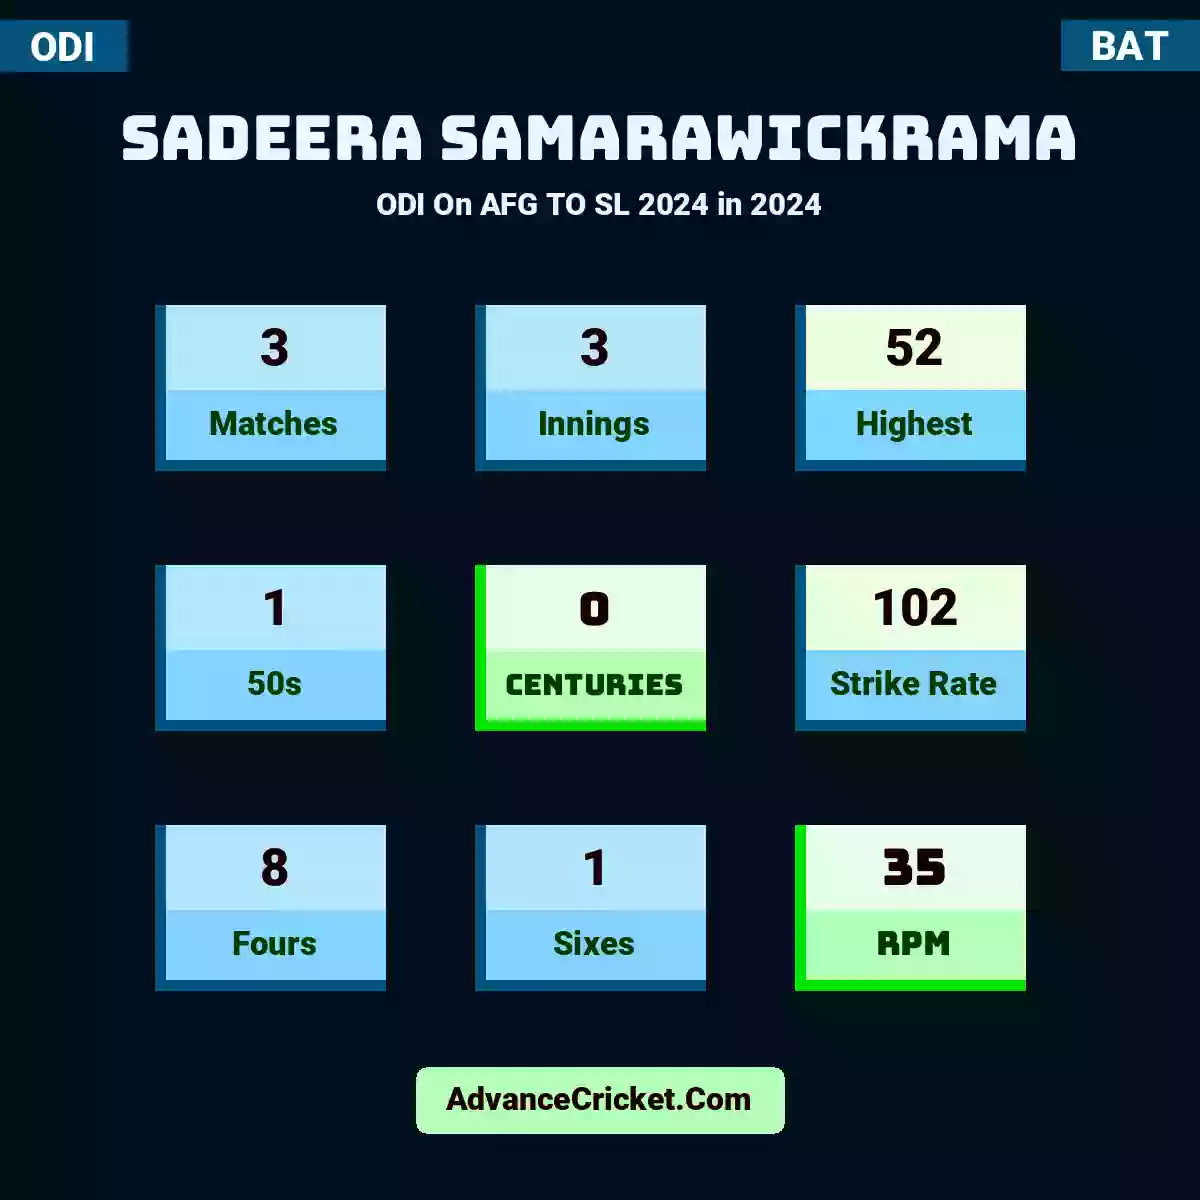 Sadeera Samarawickrama ODI  On AFG TO SL 2024 in 2024, Sadeera Samarawickrama played 3 matches, scored 52 runs as highest, 1 half-centuries, and 0 centuries, with a strike rate of 102. S.Samarawickrama hit 8 fours and 1 sixes, with an RPM of 35.